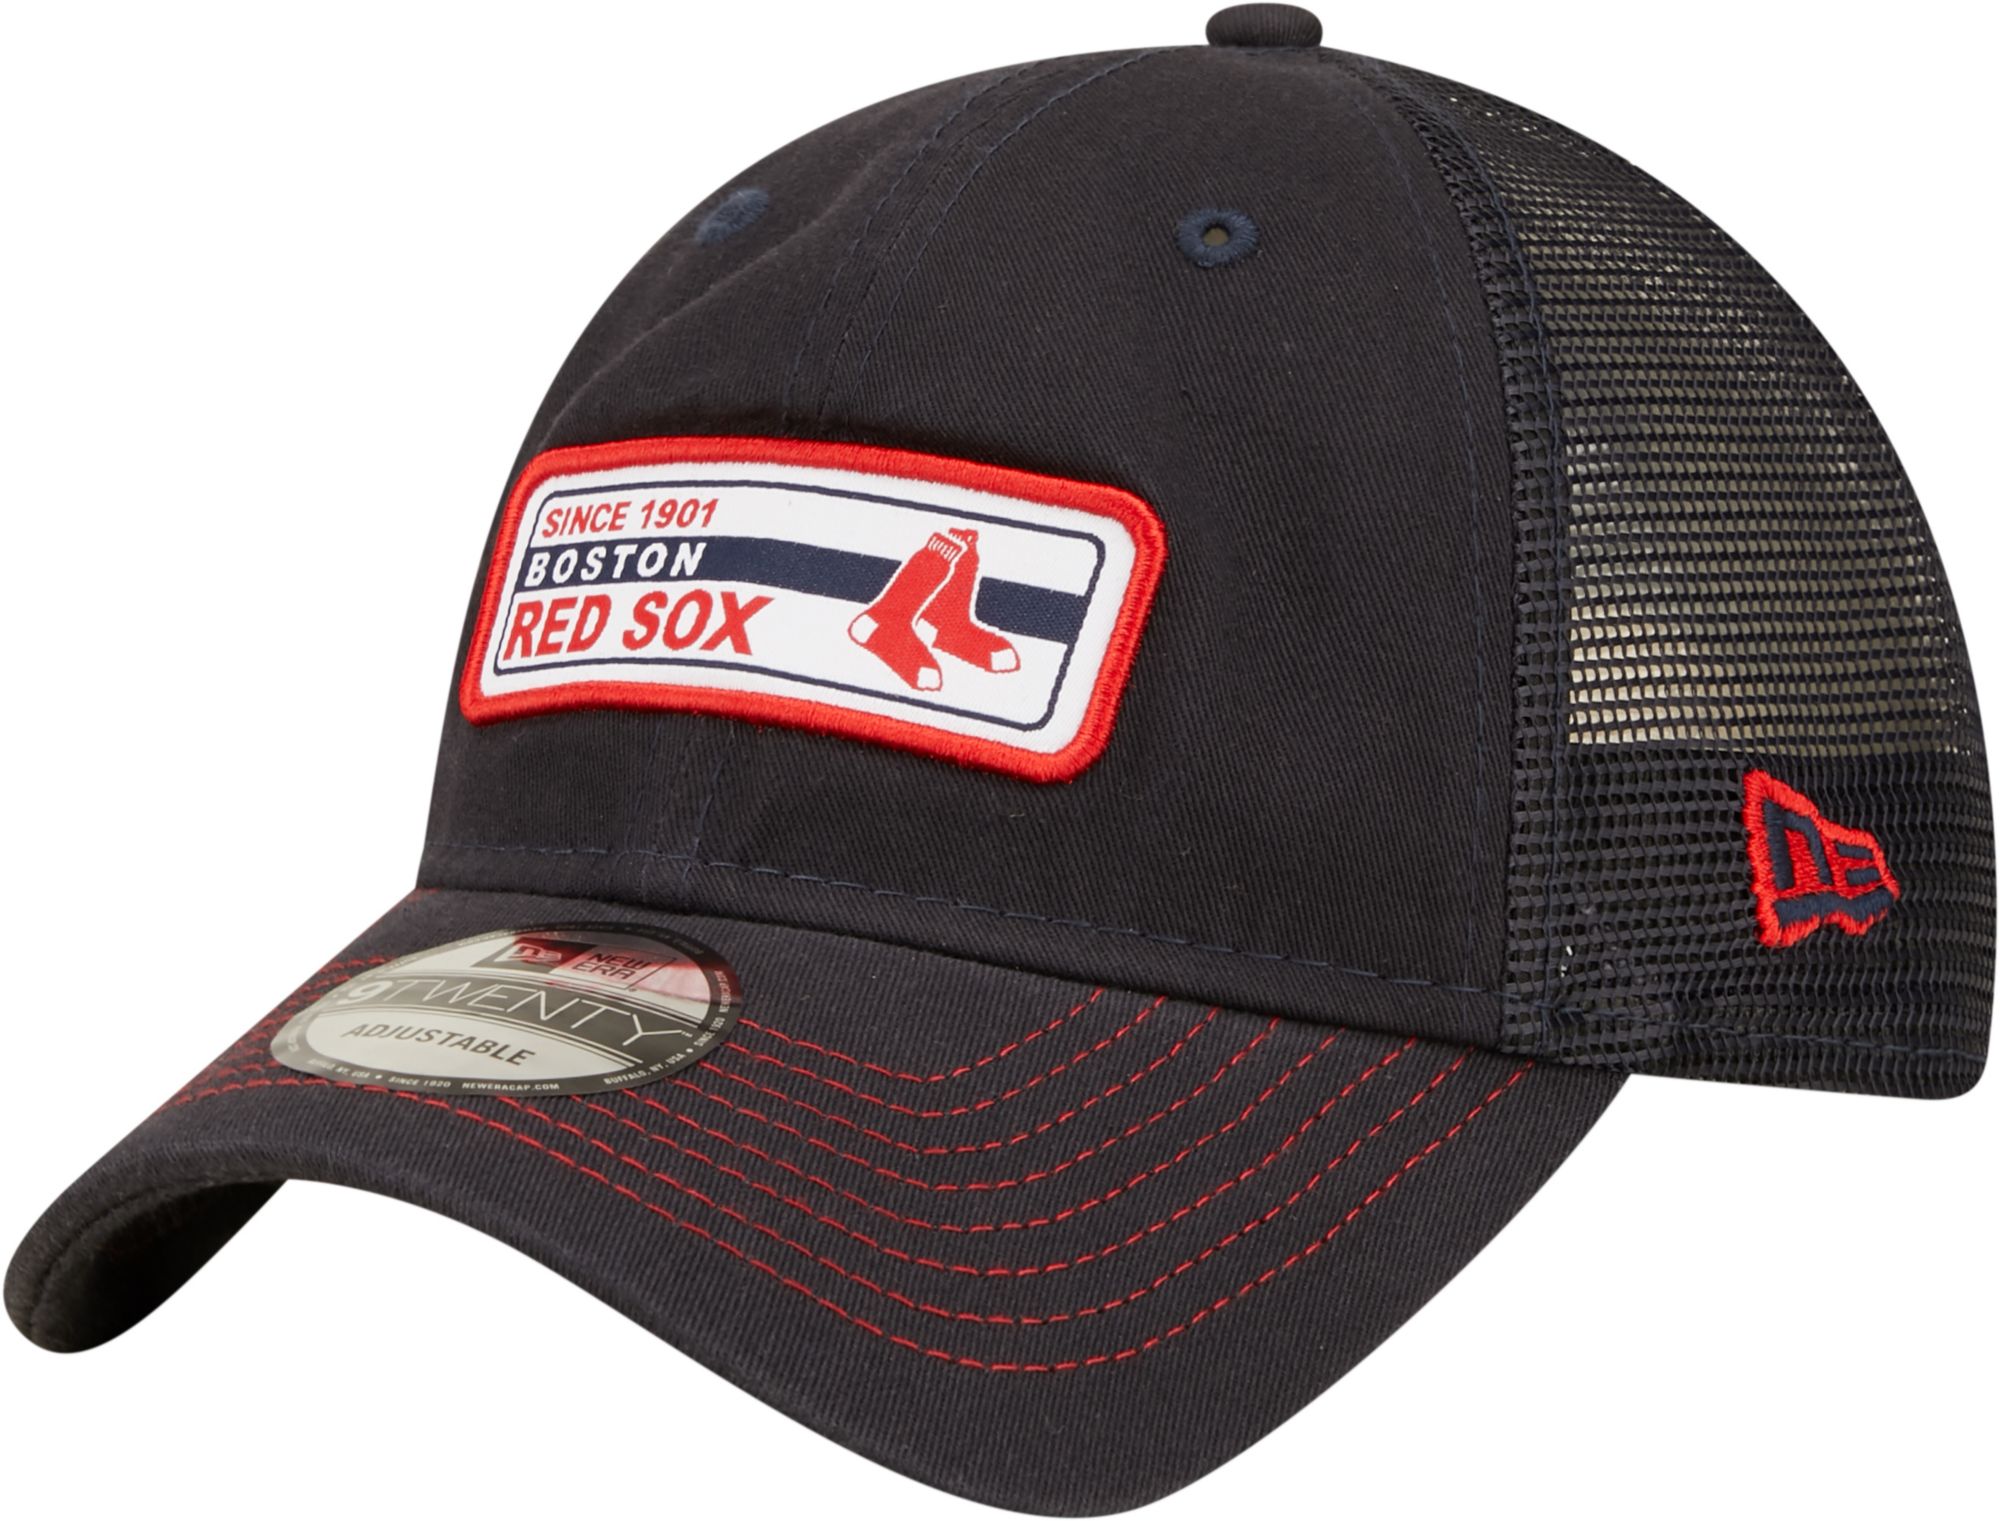 St. Louis Cardinals New Era Color Pack 9TWENTY Adjustable Hat - Navy